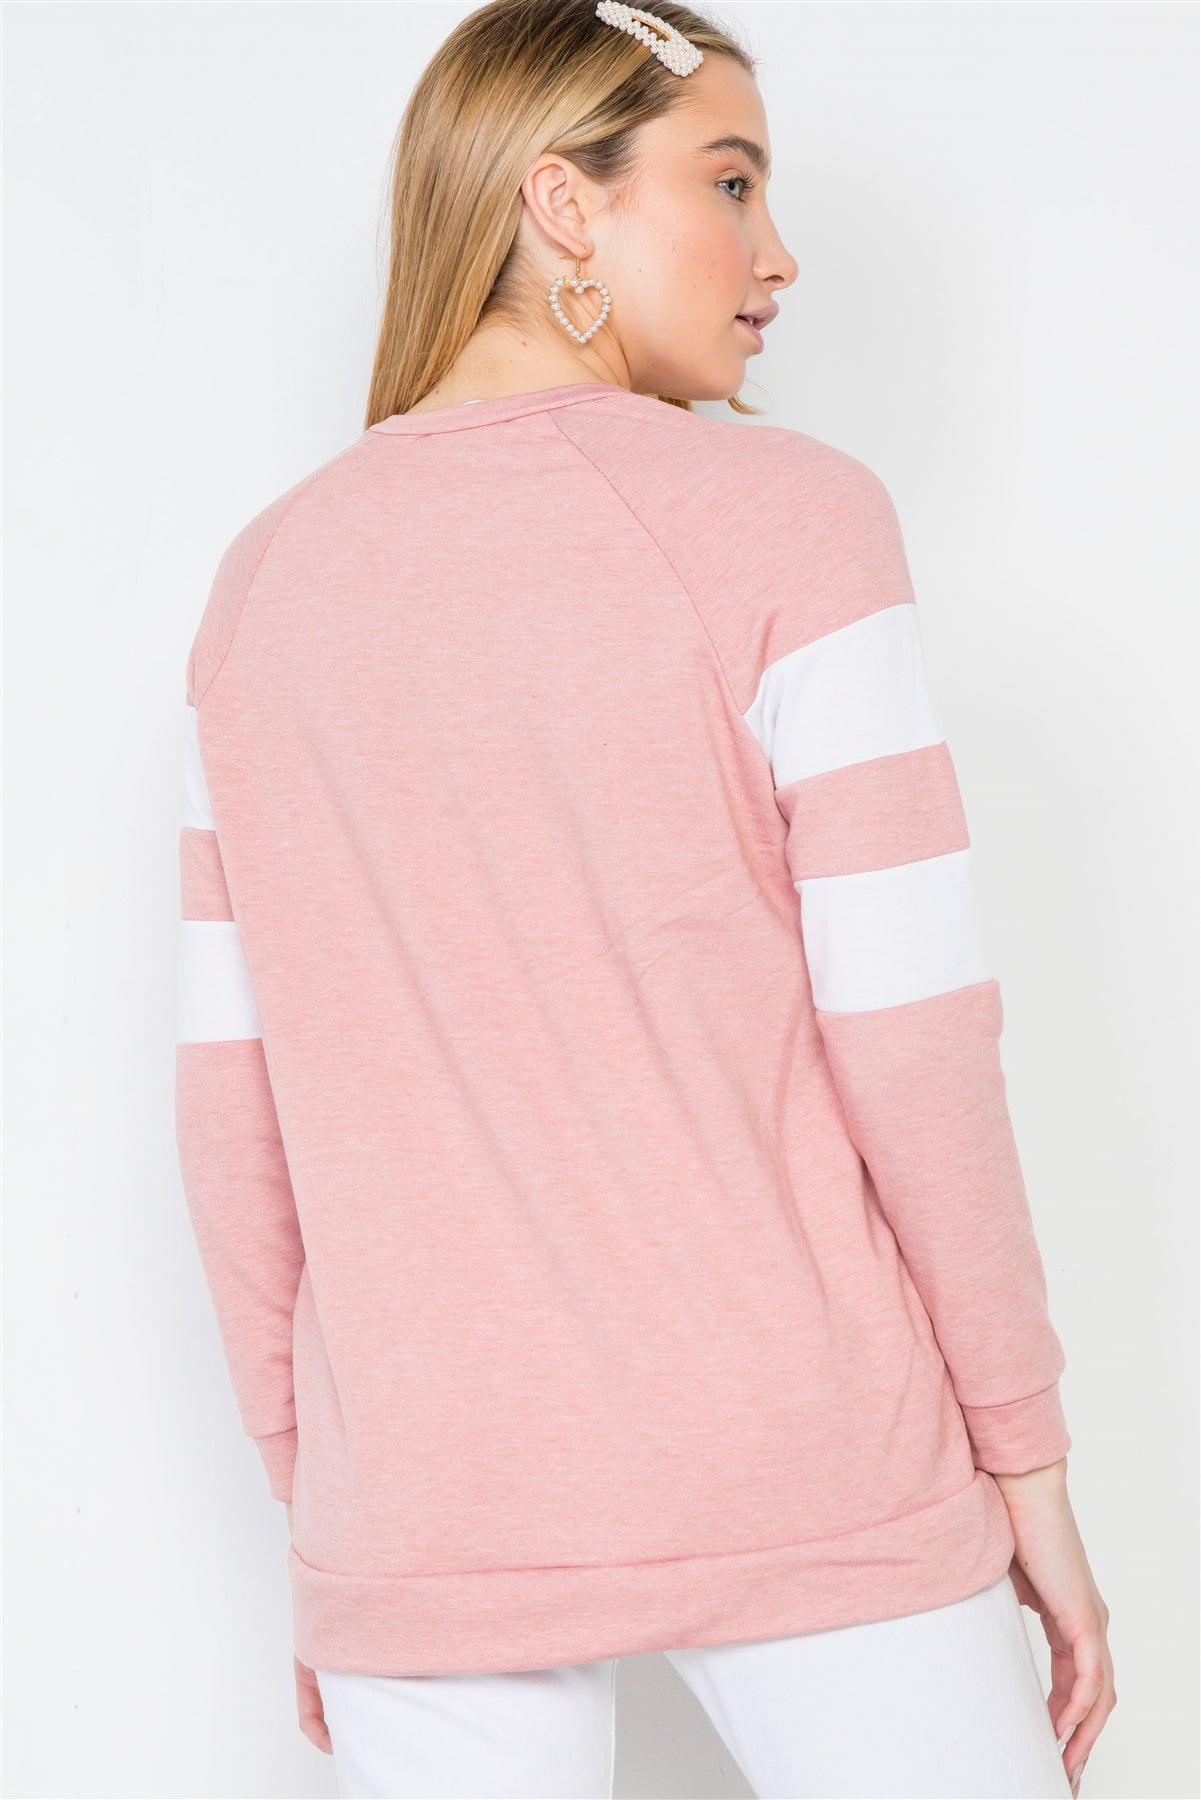 Mauve long Sleeve Colorblock Casual Sweater /2-2-2